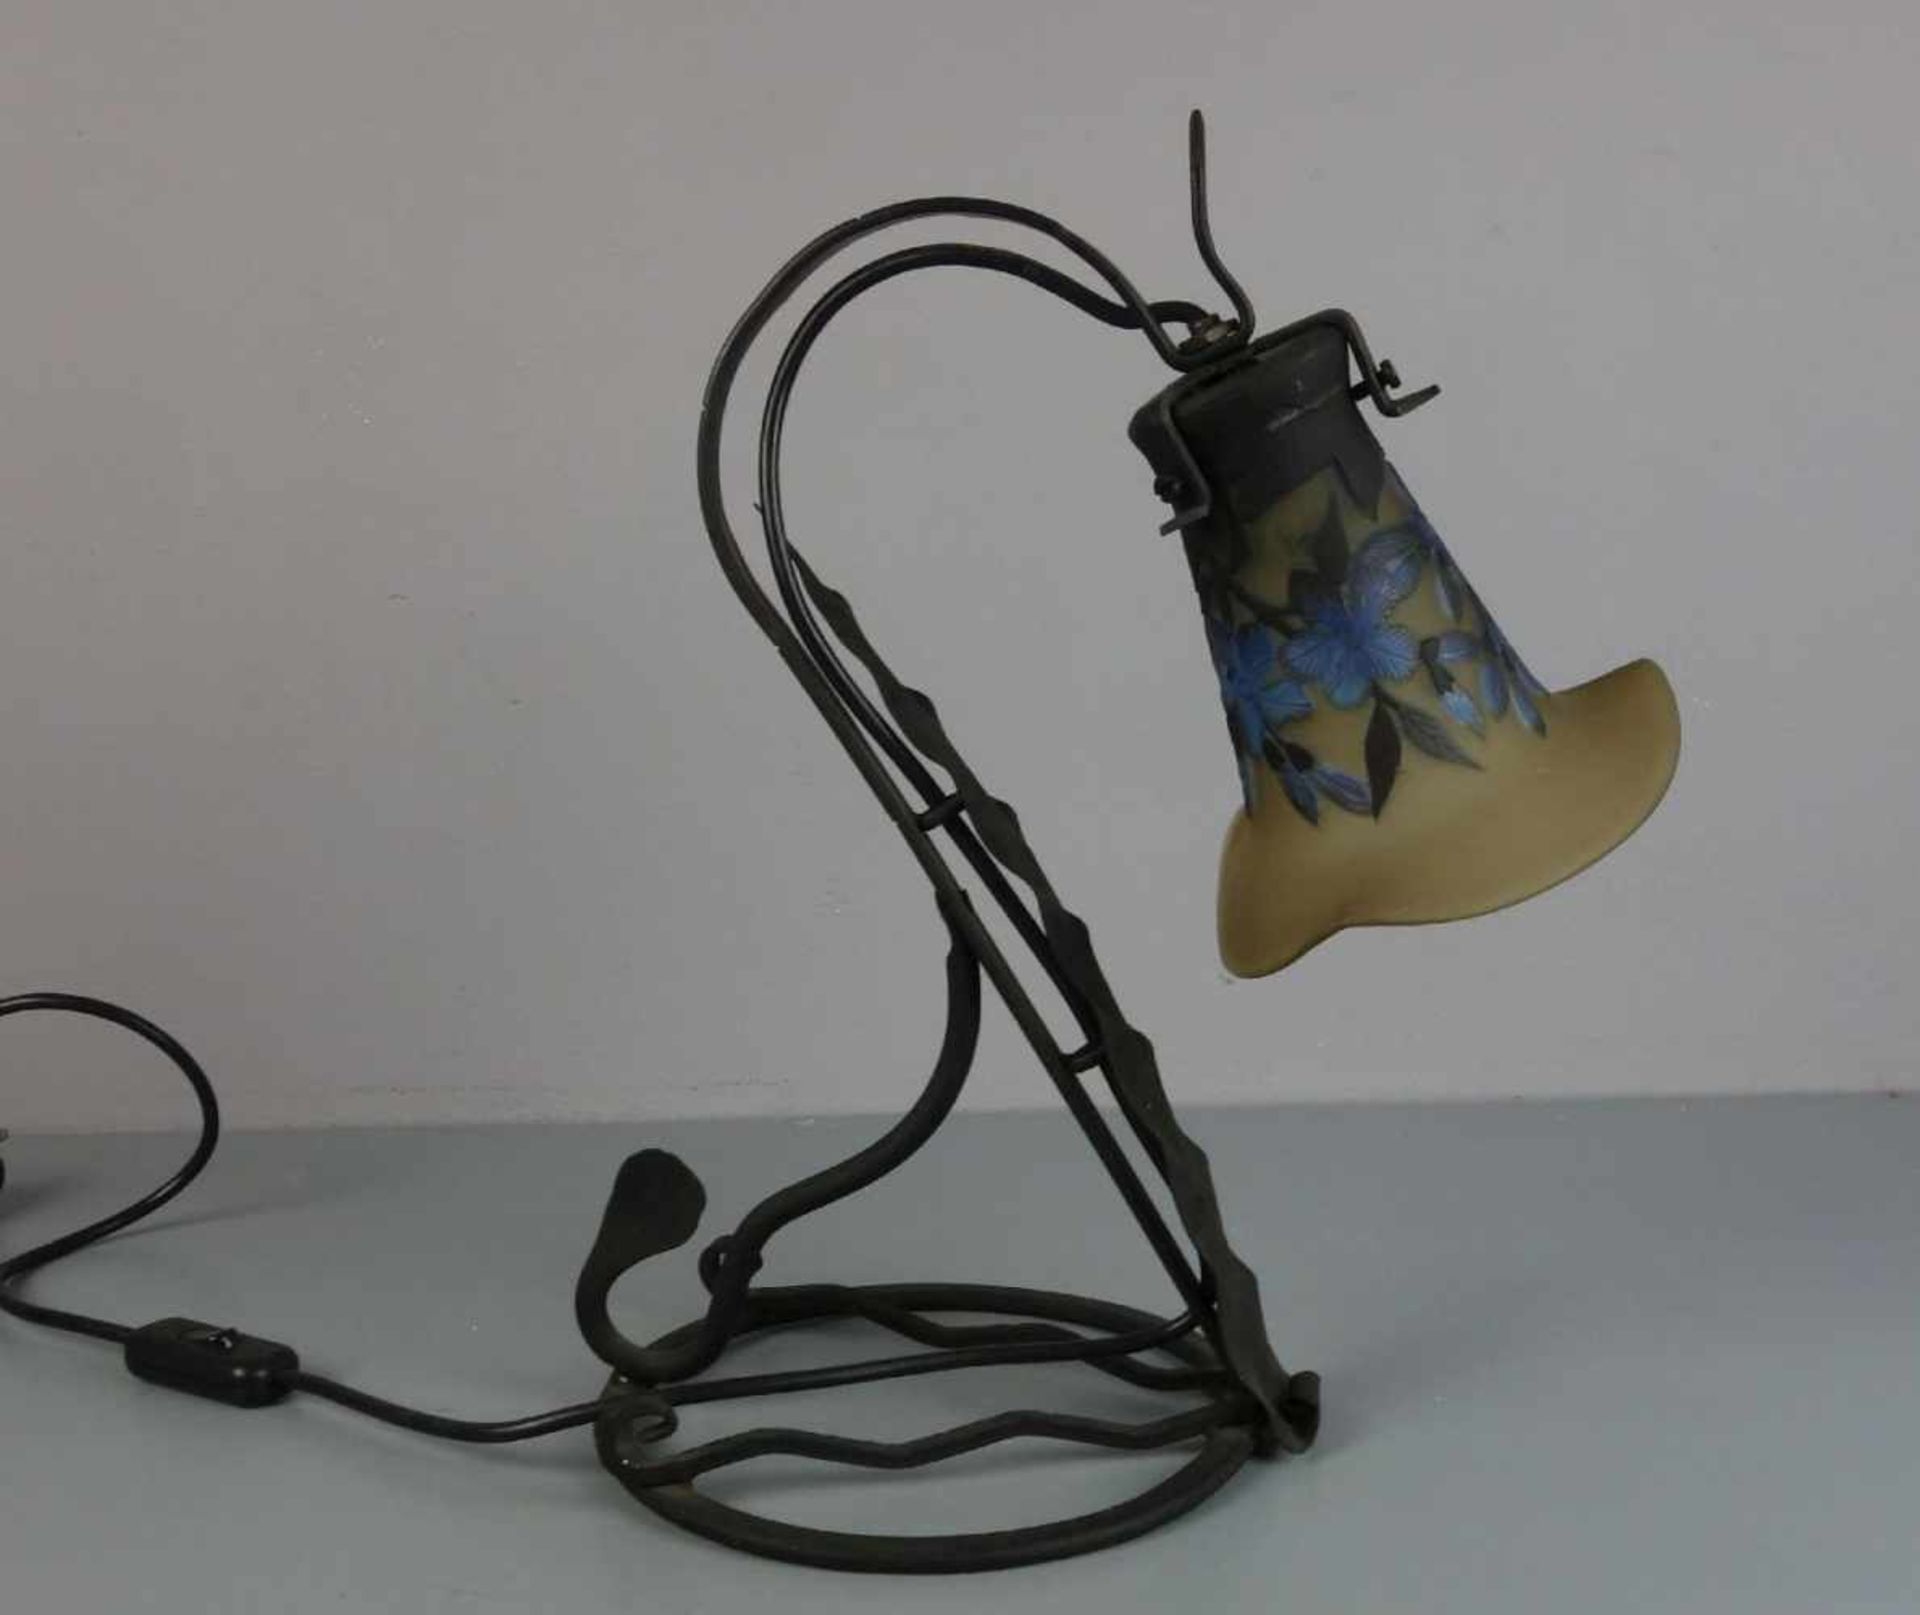 LAMPE / TISCHLAMPE in der Anmutung des Jugendstils, Eisen, einflammige Brennstelle, Glaskuppel, 2. - Image 4 of 4